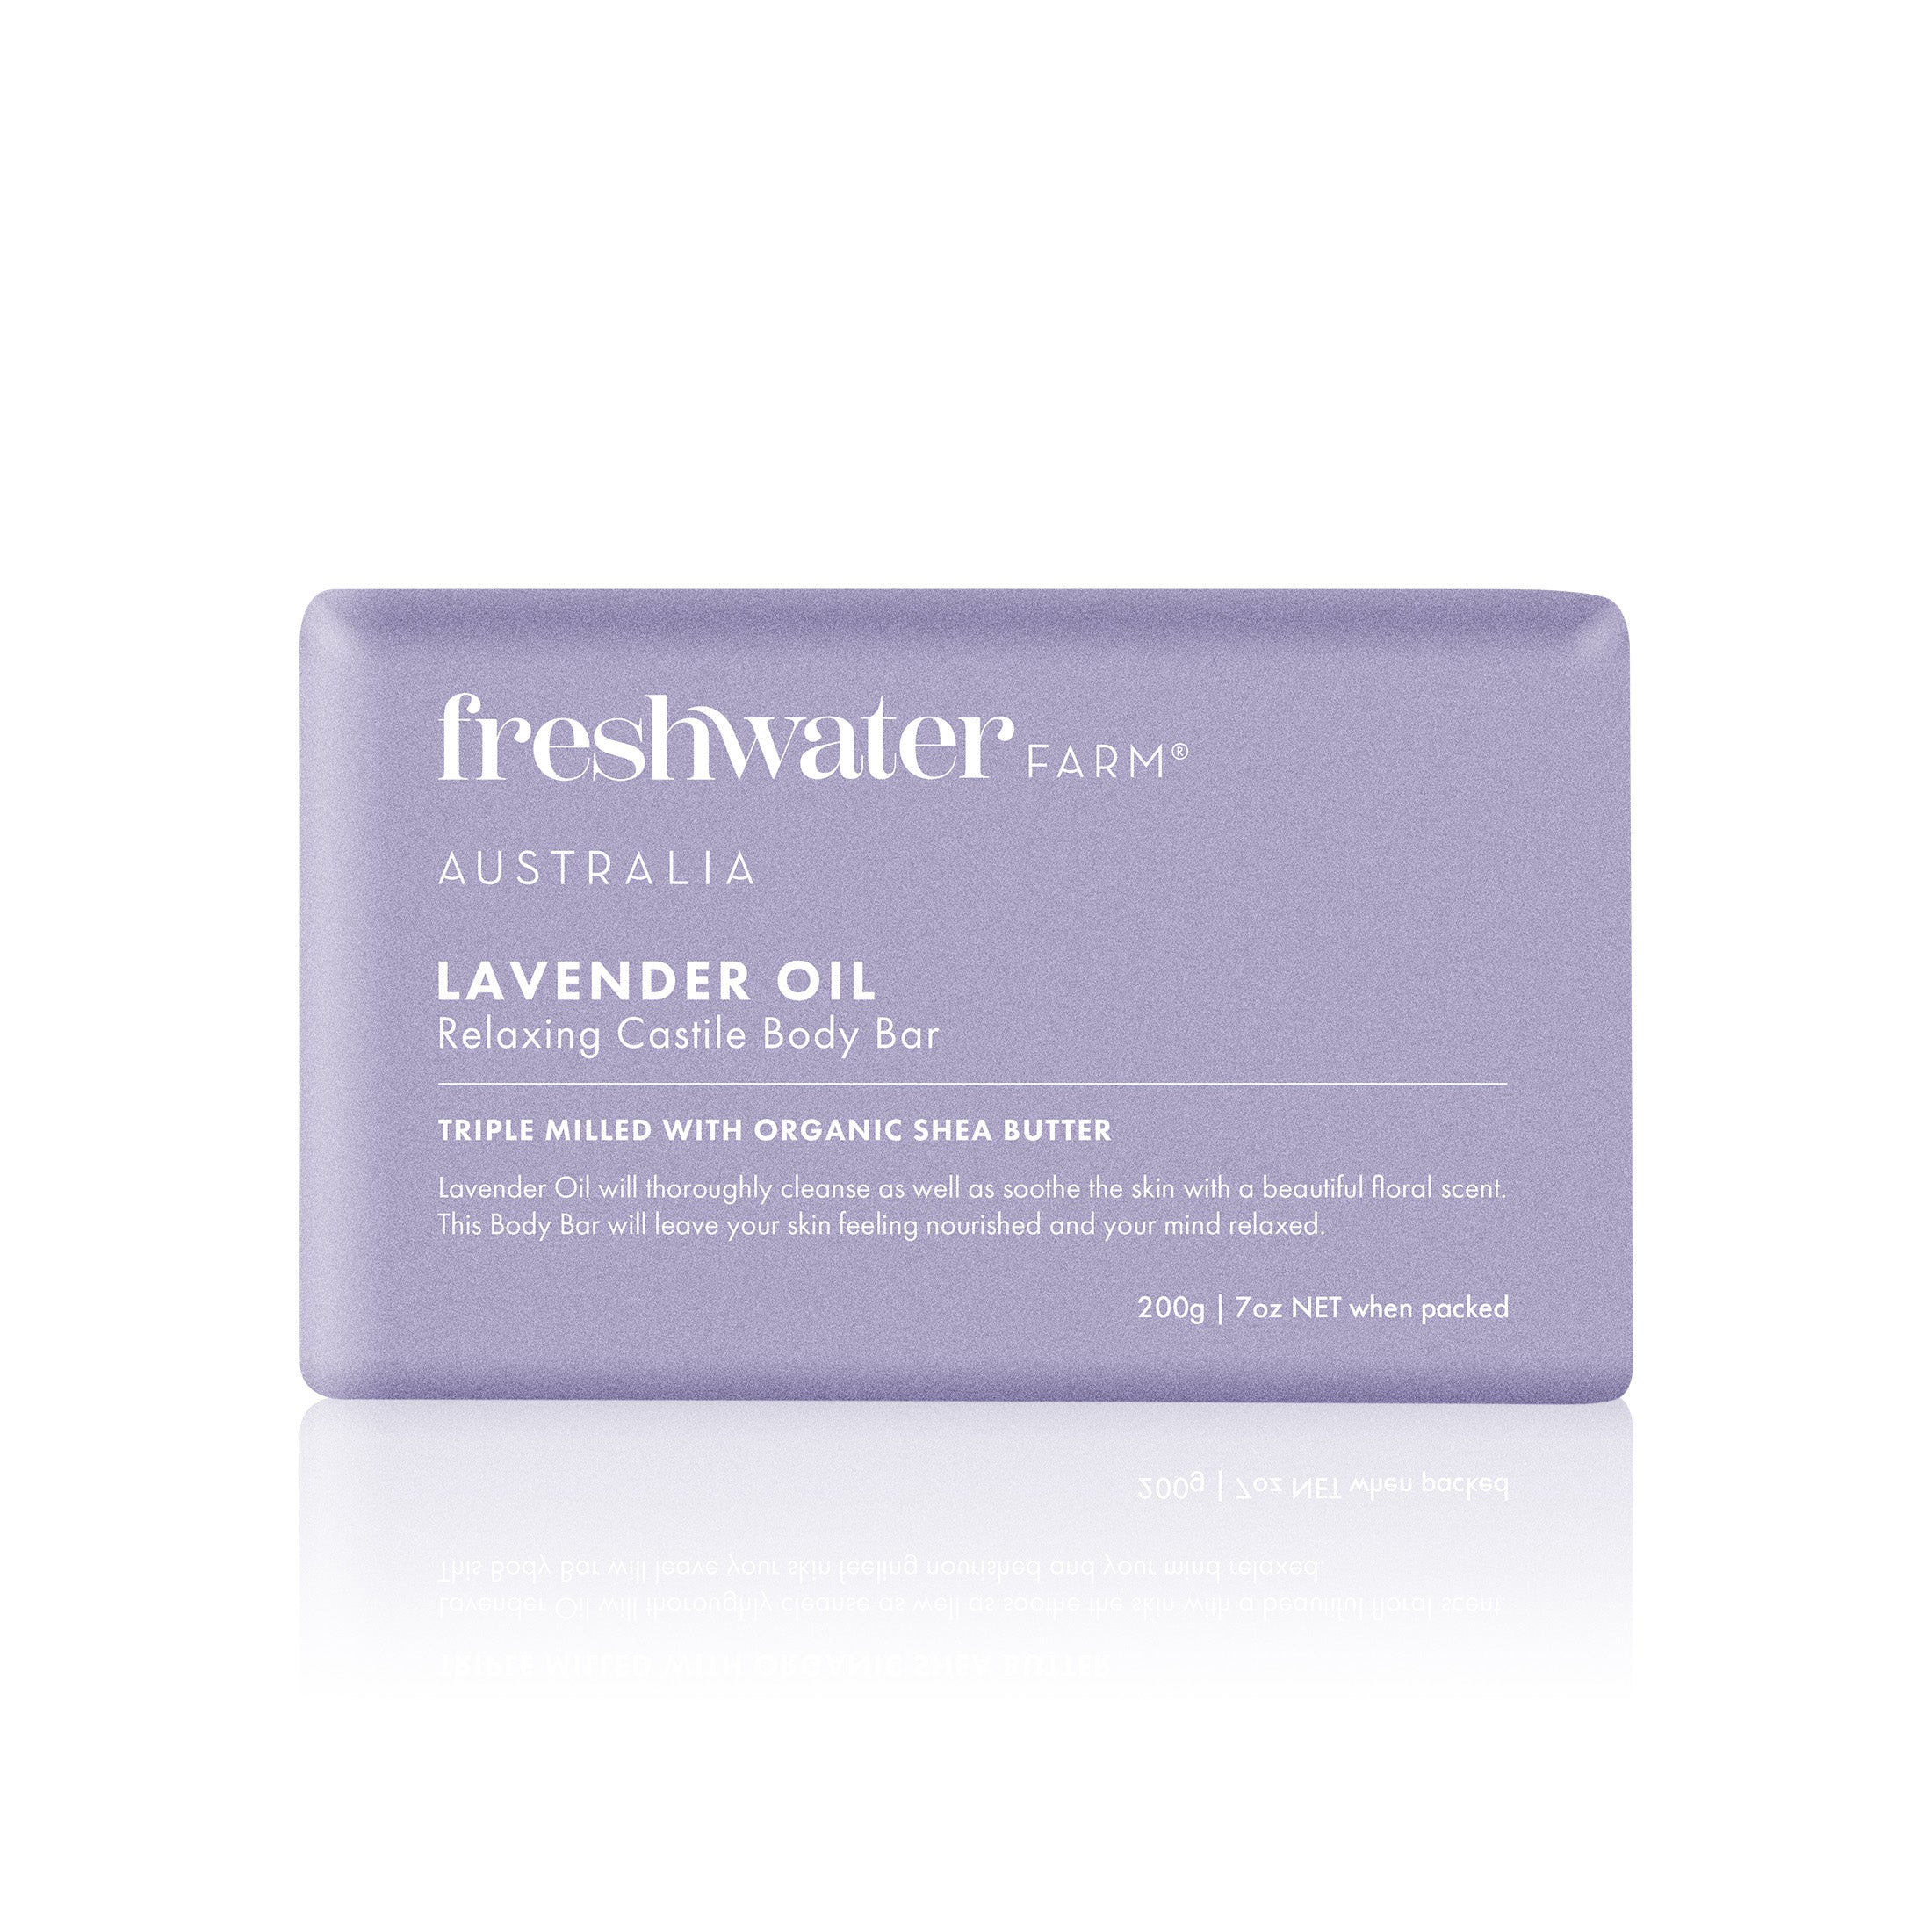 Freshwater Farm Lavender Oil 200g Body Bar